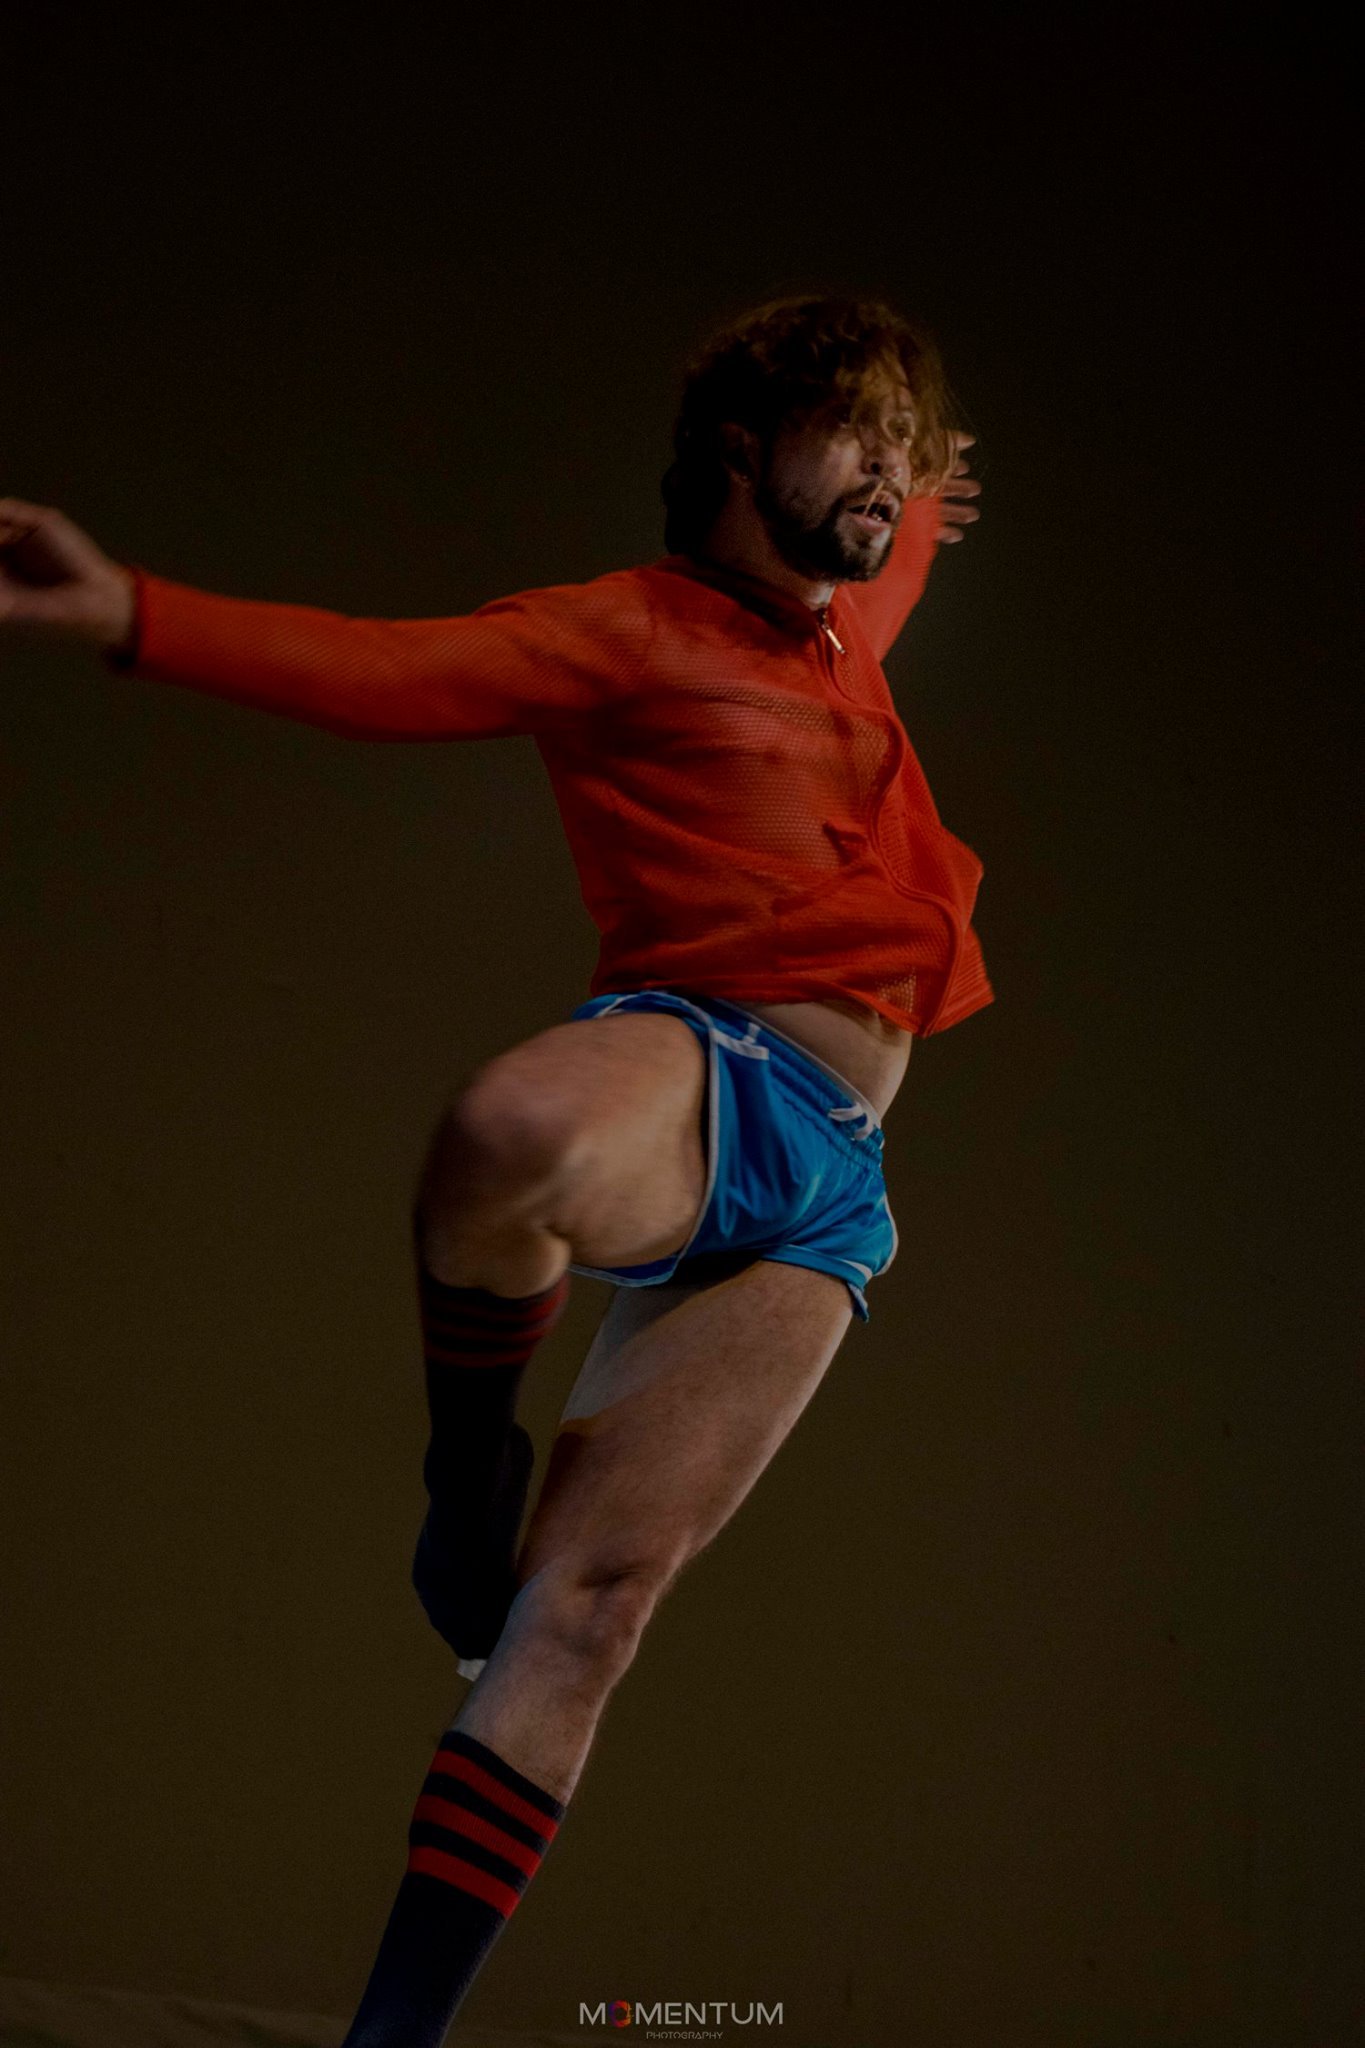 hombre baila con shorts azules y camiseta naranja, alza los brazos